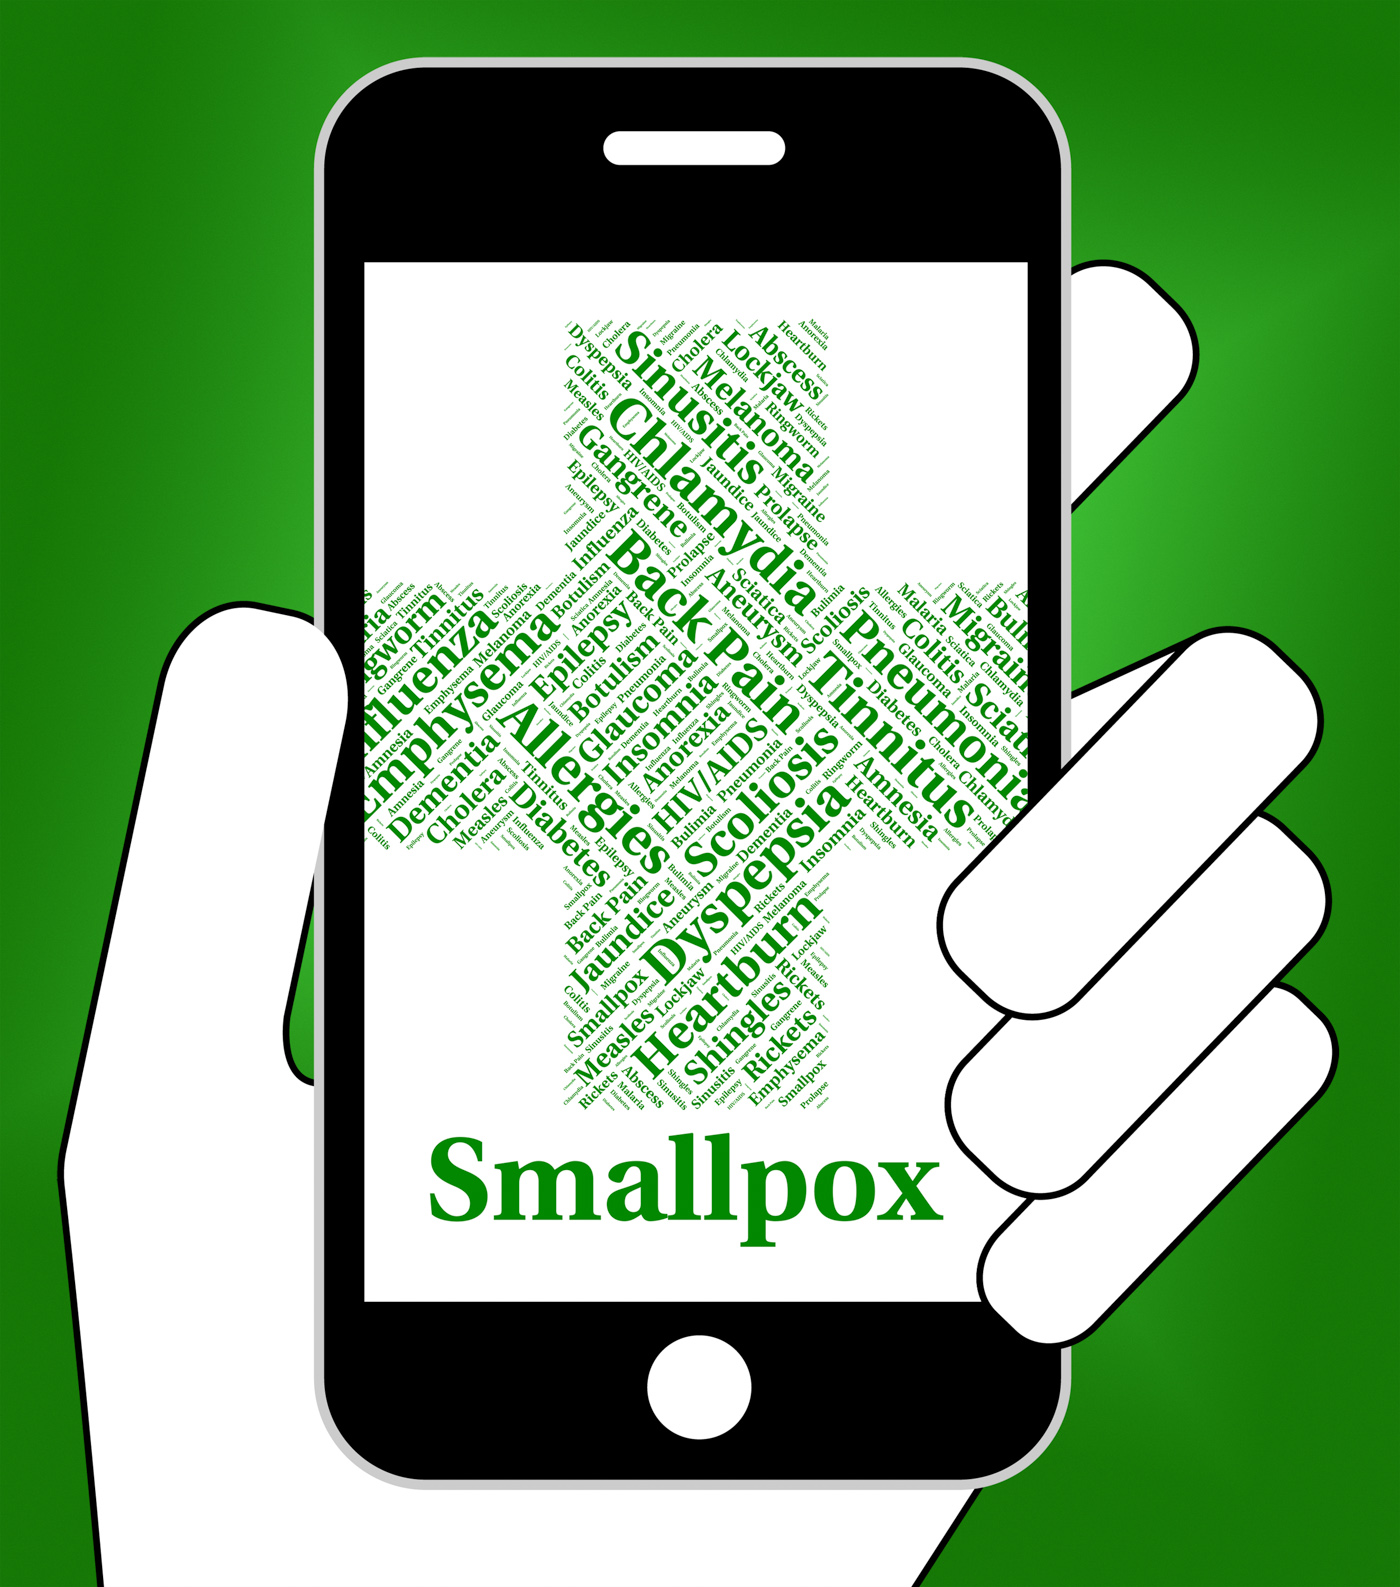 Smallpox illness means variola minor and contagion photo